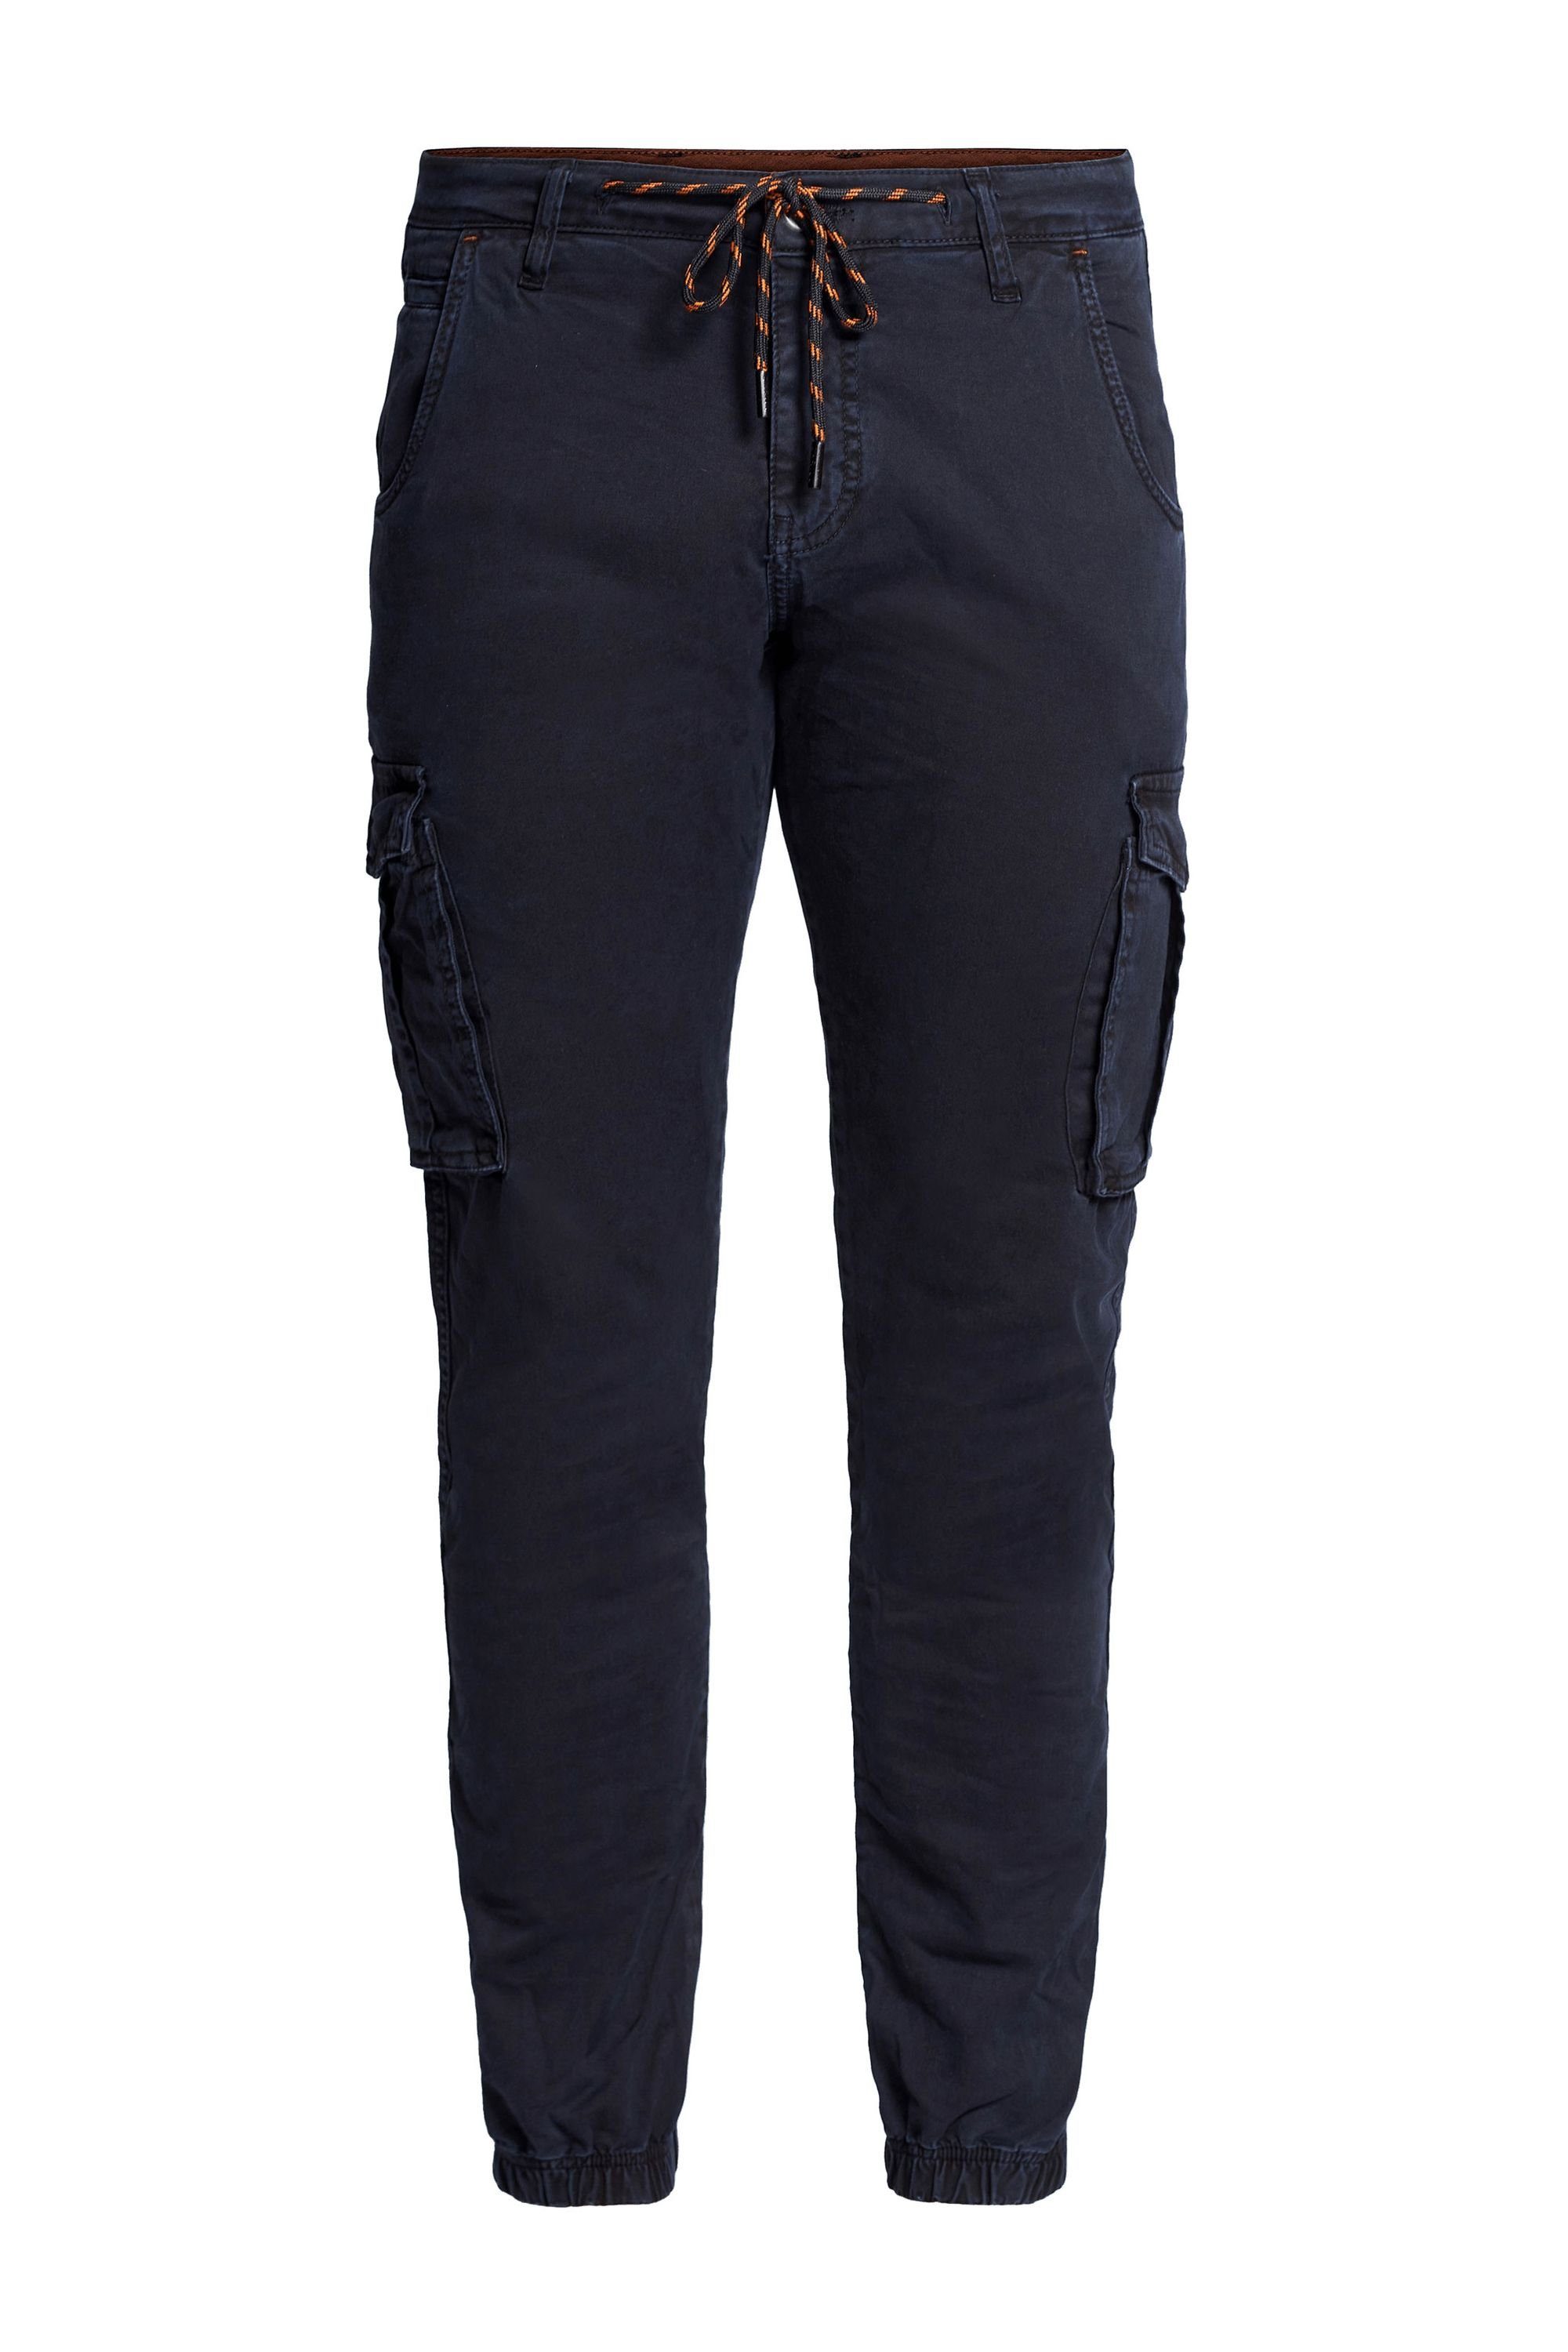 Zhrill 7/8-Jeans Cargohose MICHA Black angenehmer Tragekomfort